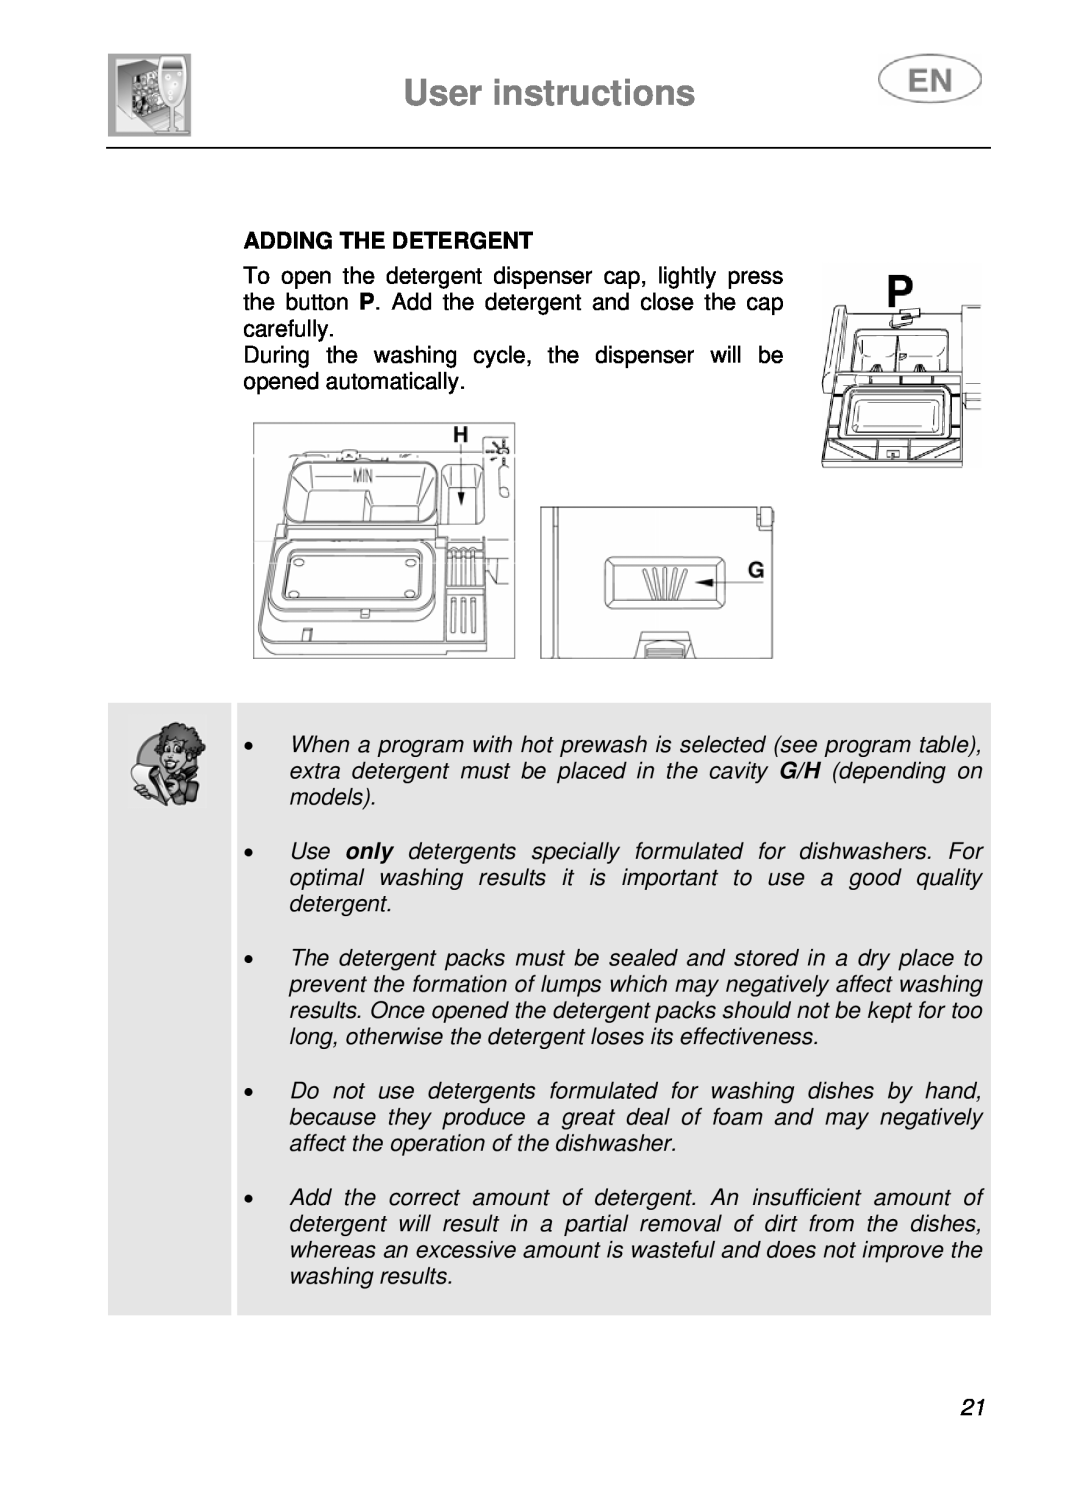 Smeg LVS1449B instruction manual User instructions, Adding The Detergent 